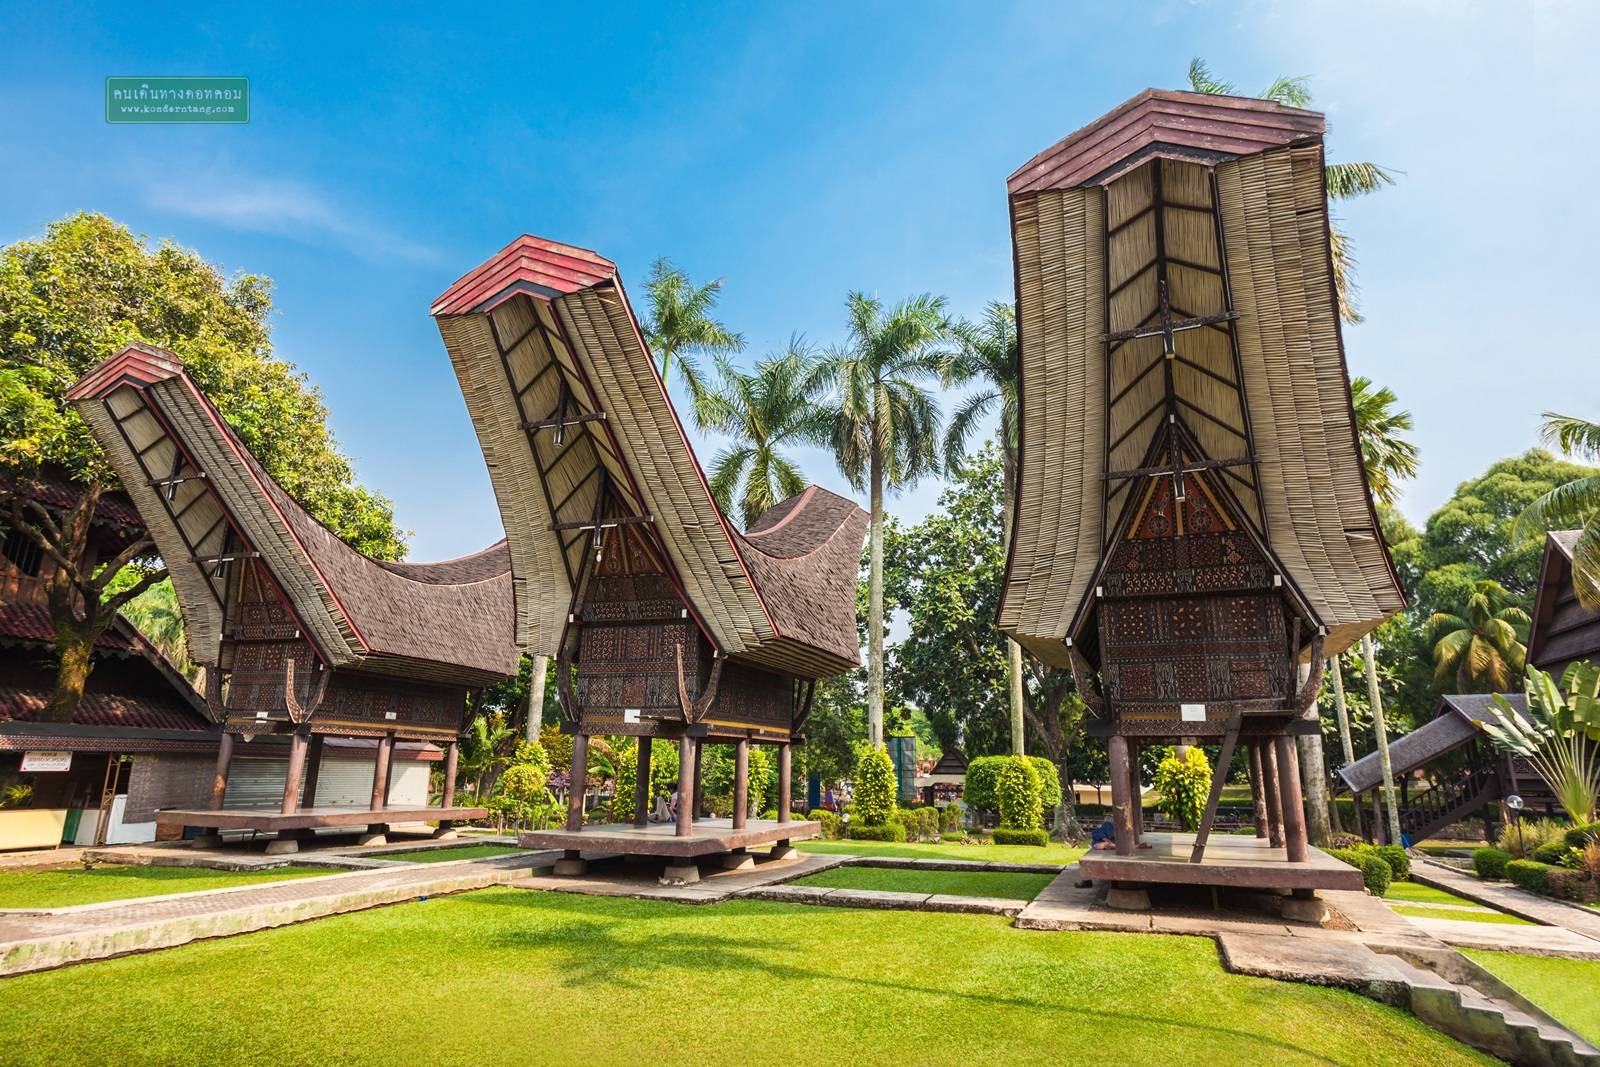 Sulawesi pavilion in the Taman Mini Indonesia Park